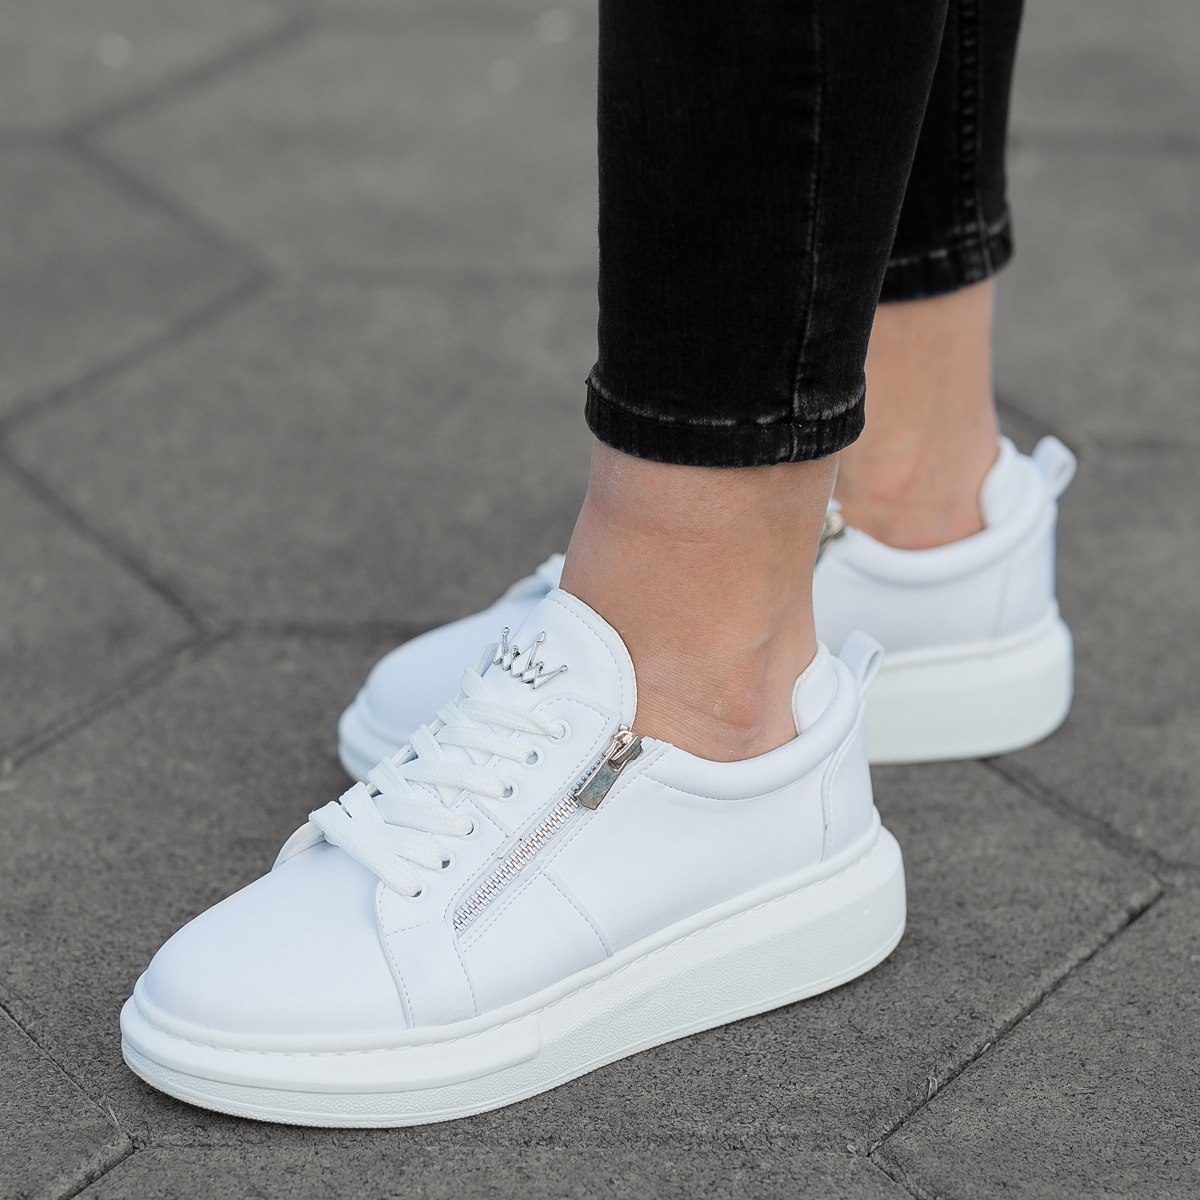 Women's Hype Sole Zipped Style Sneakers in White - 2